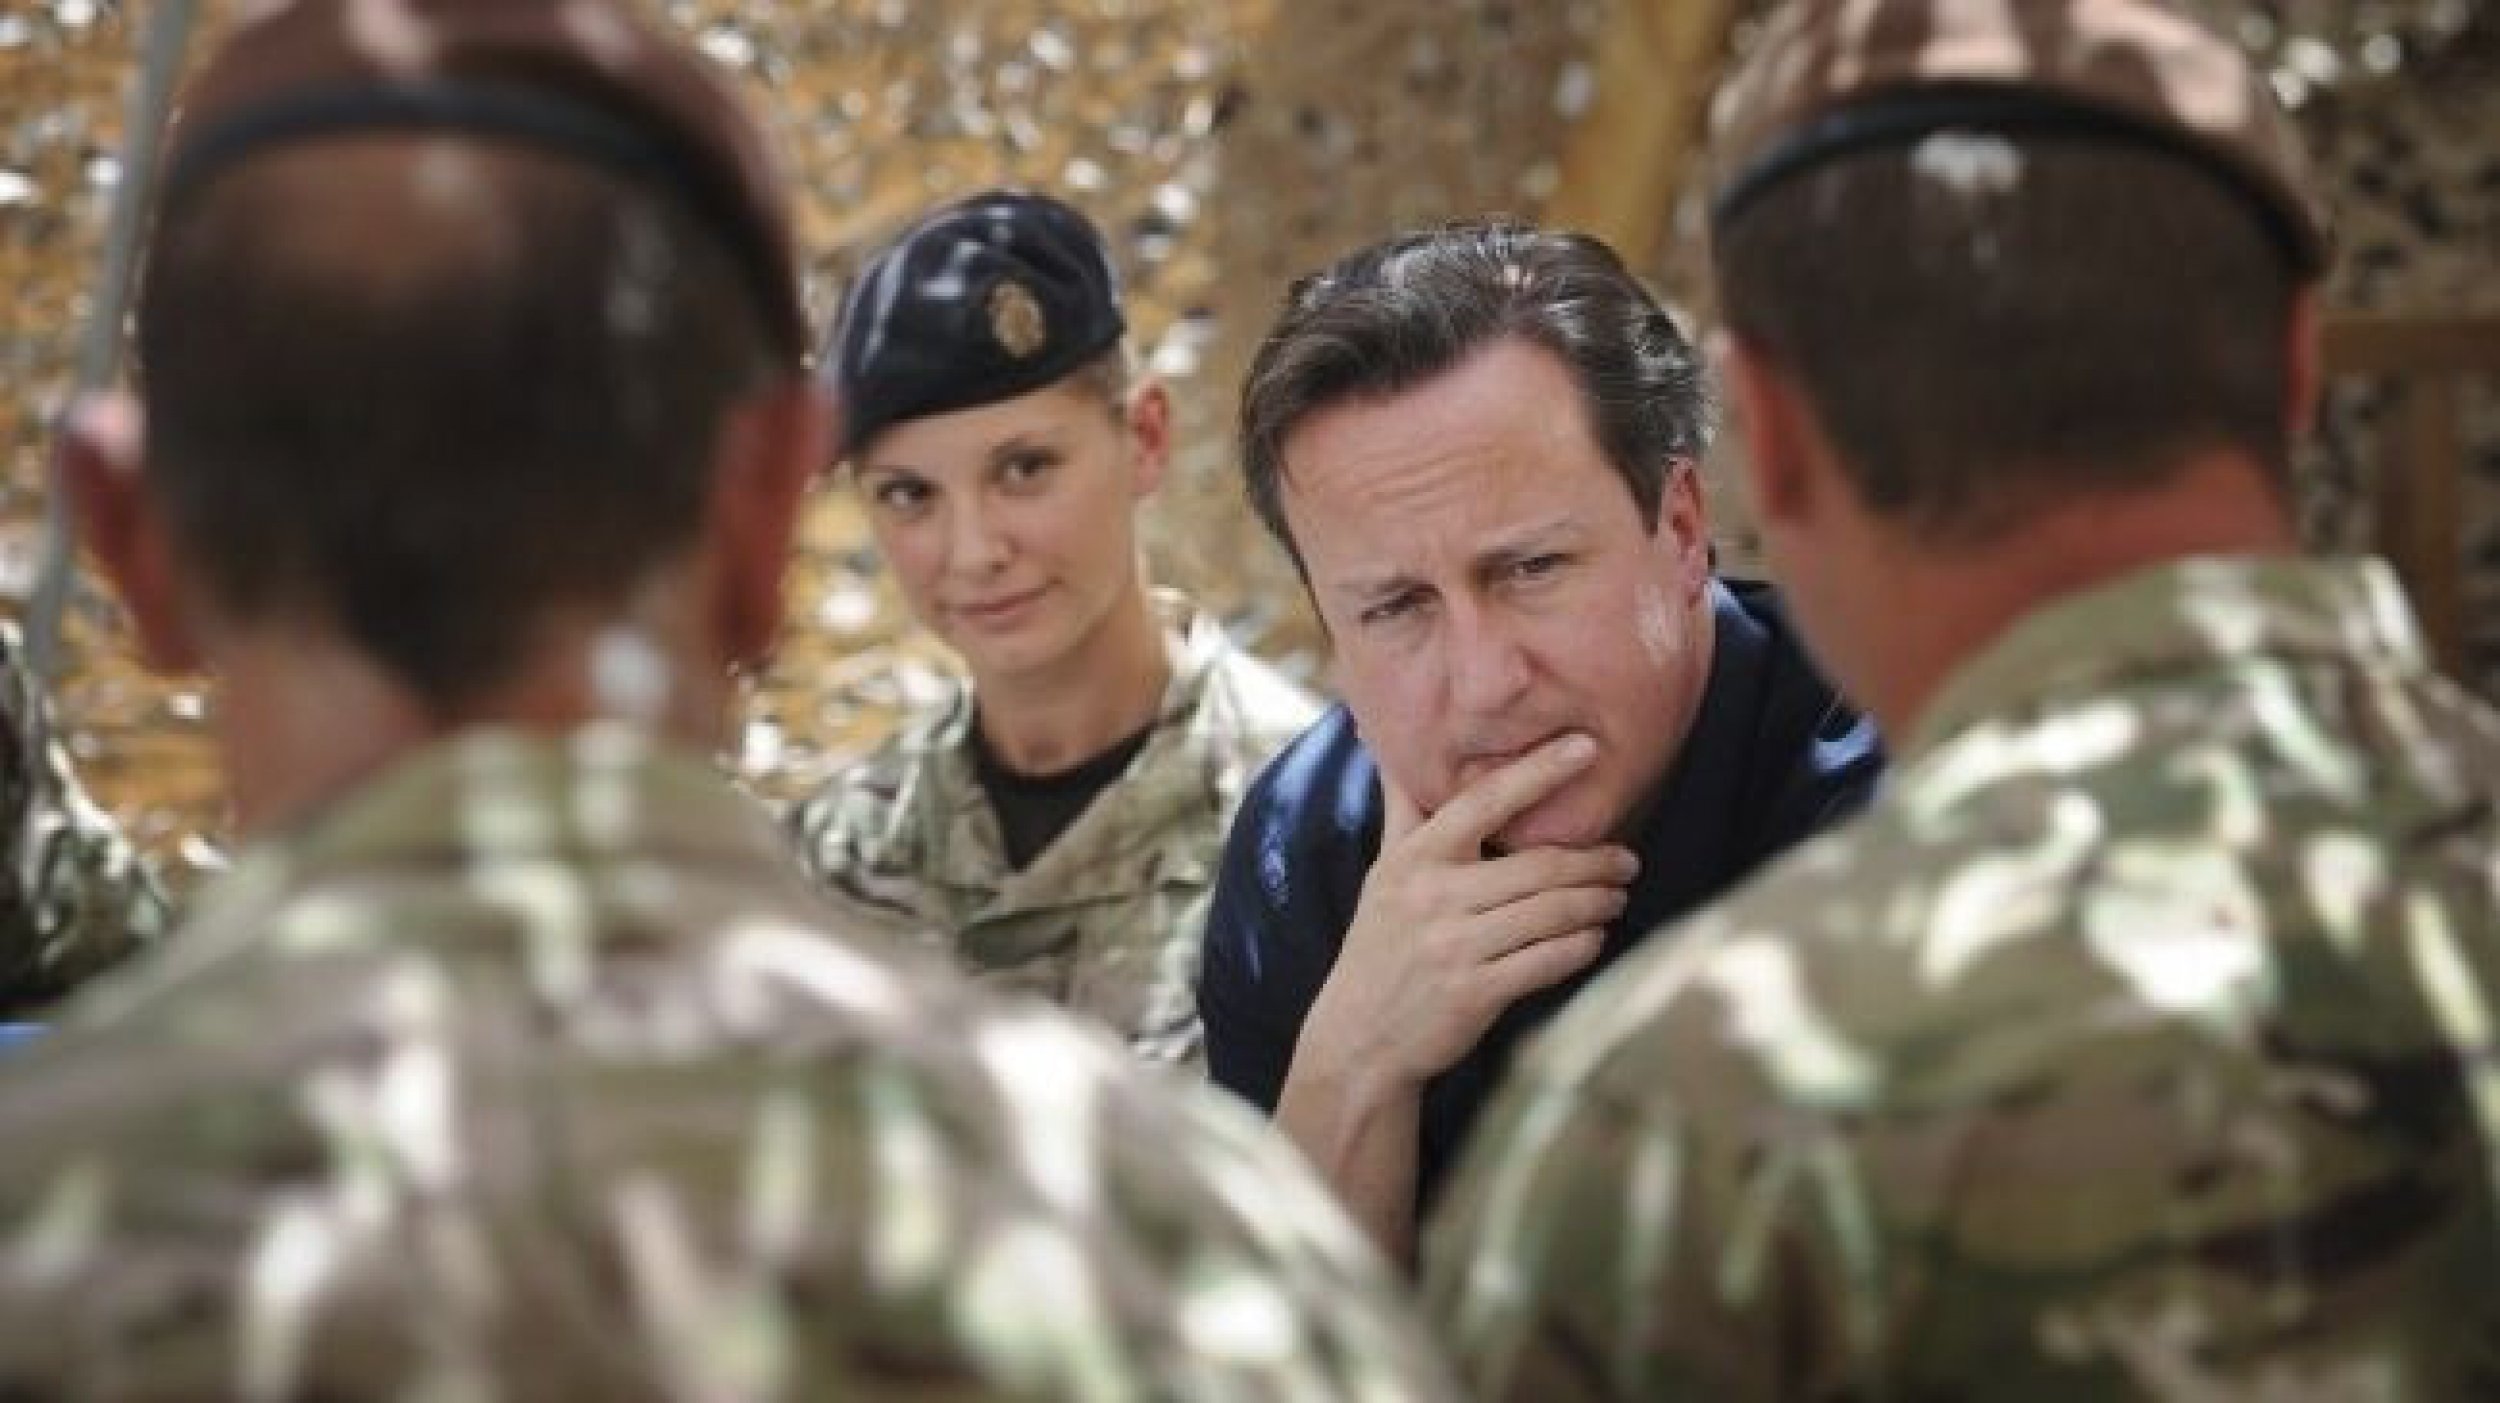 UKs David Cameron Makes Surprise Visit to Afghanistan